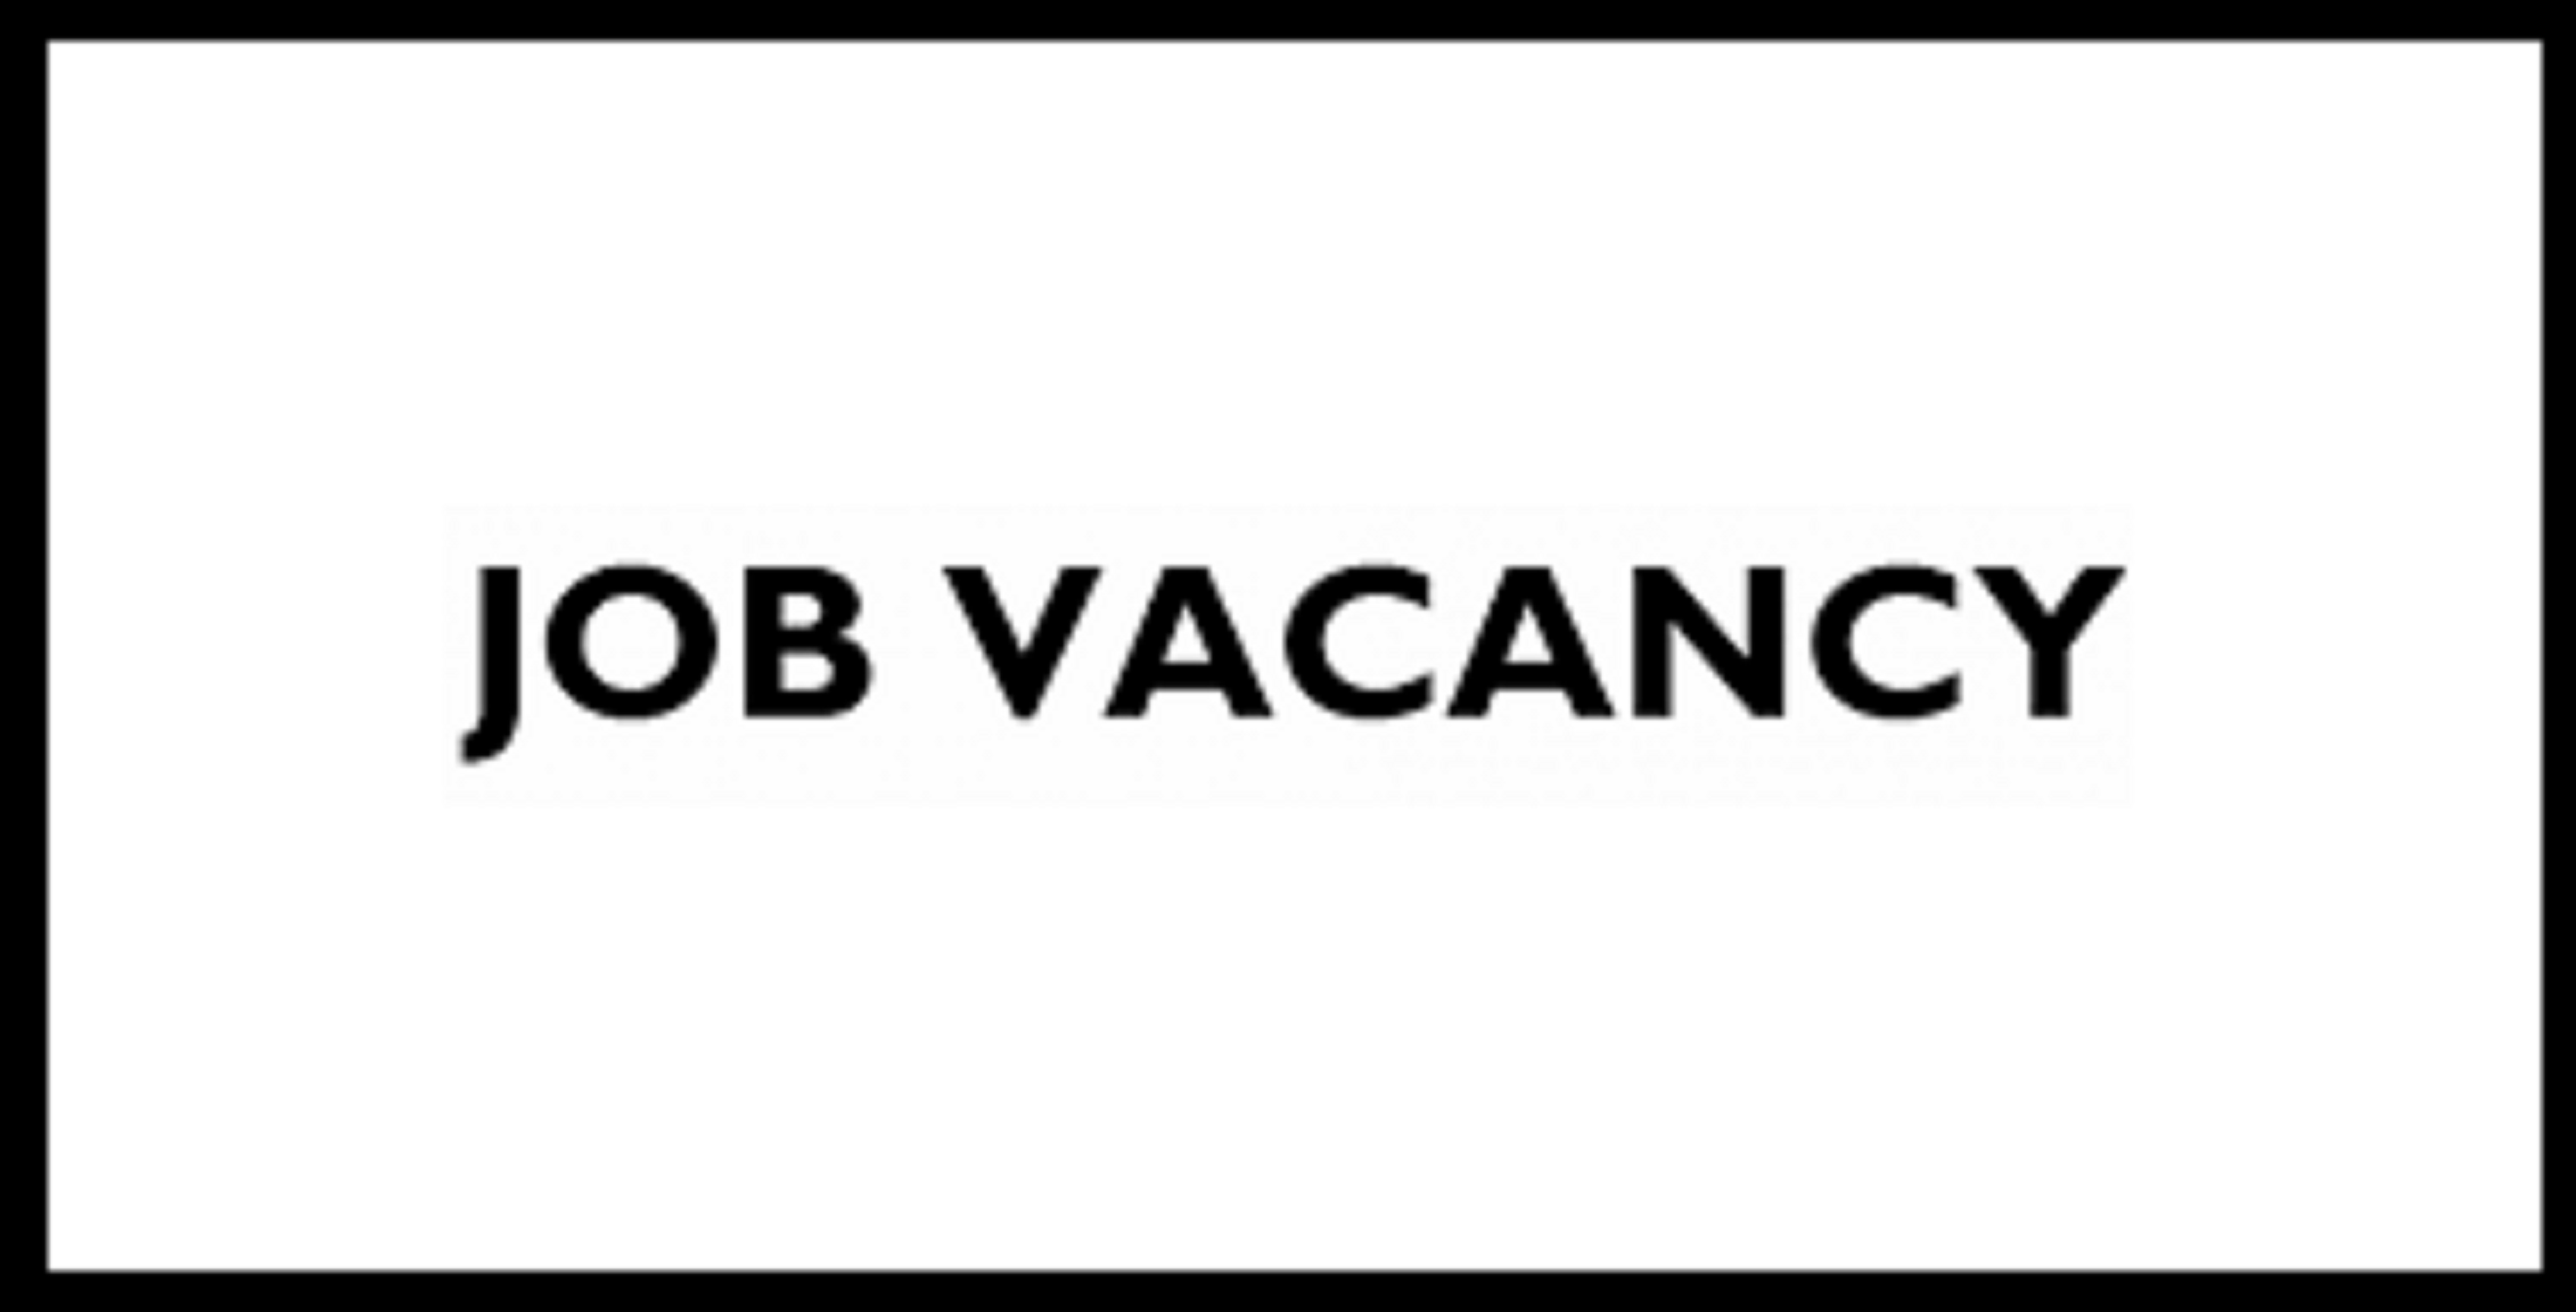 Job Vacancy Notice from Samriddhi Finance Company Limited